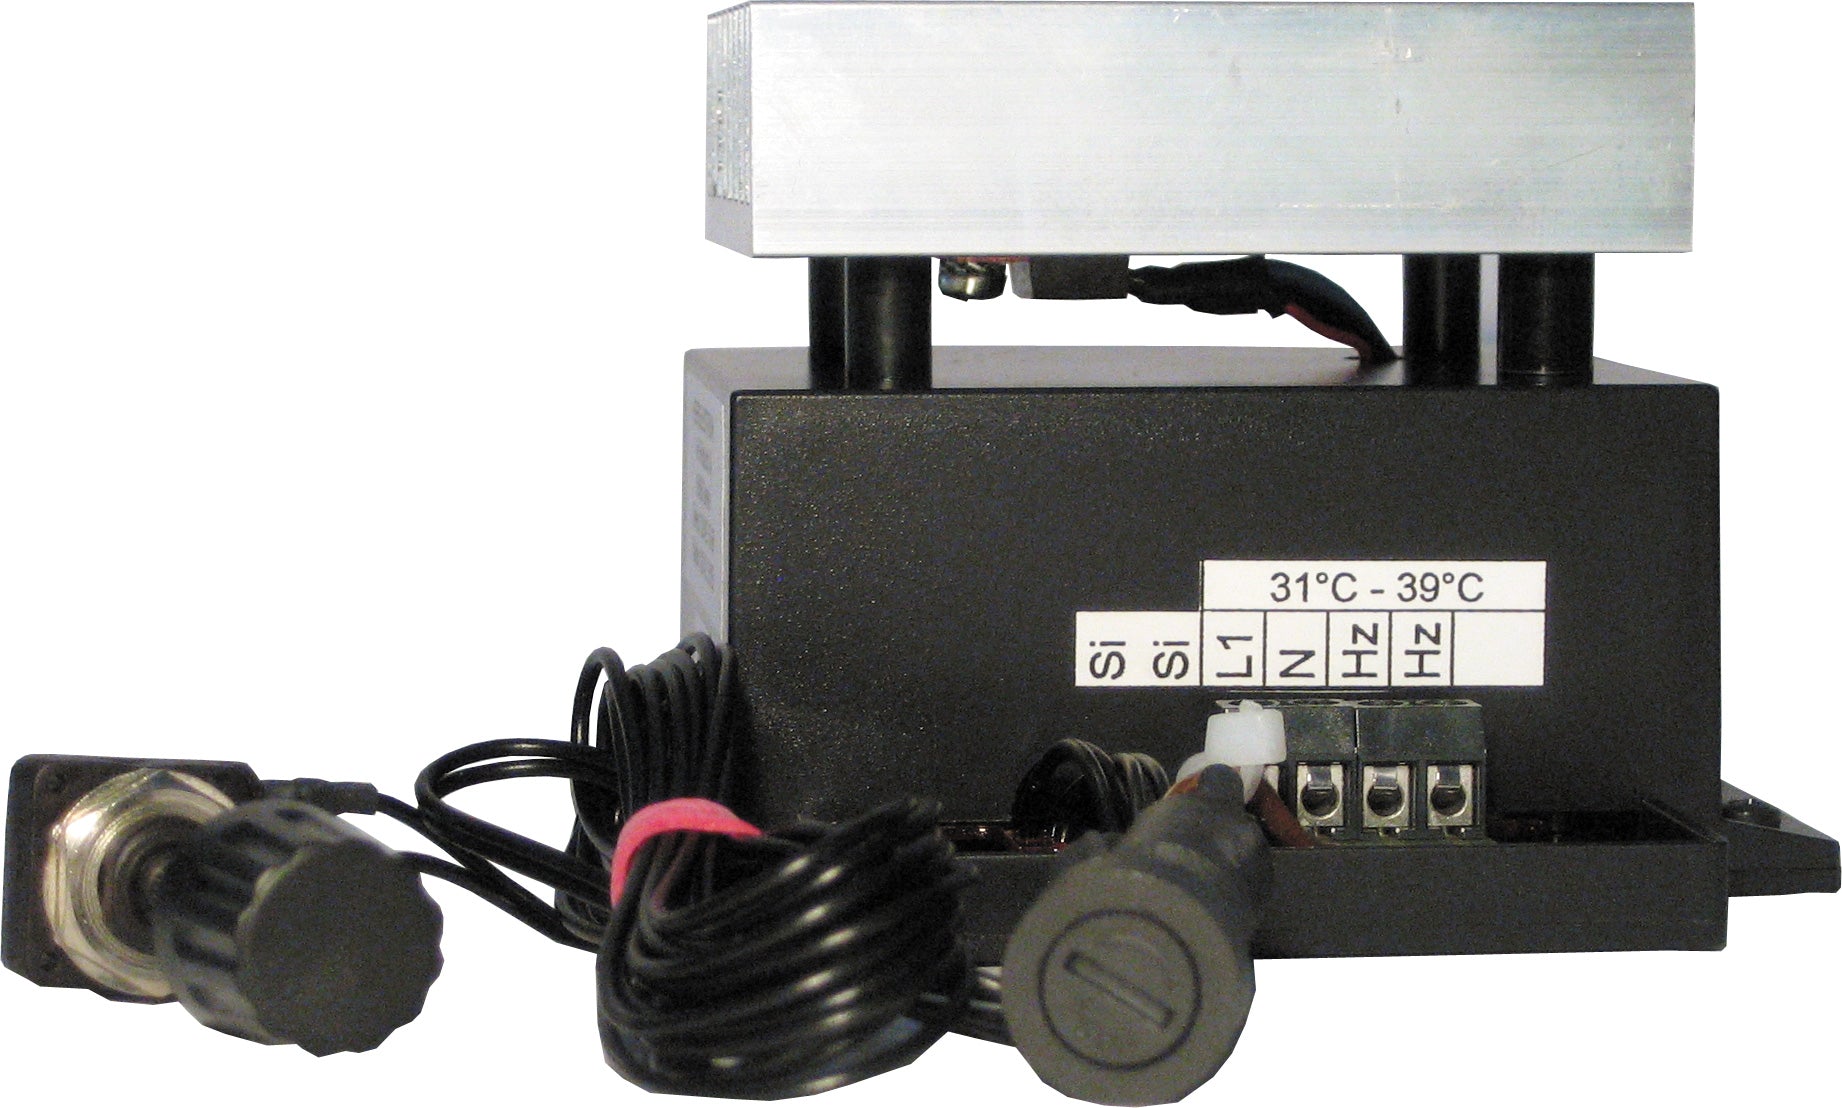 Vollelektronik-Thermostat, bis 1500 Watt